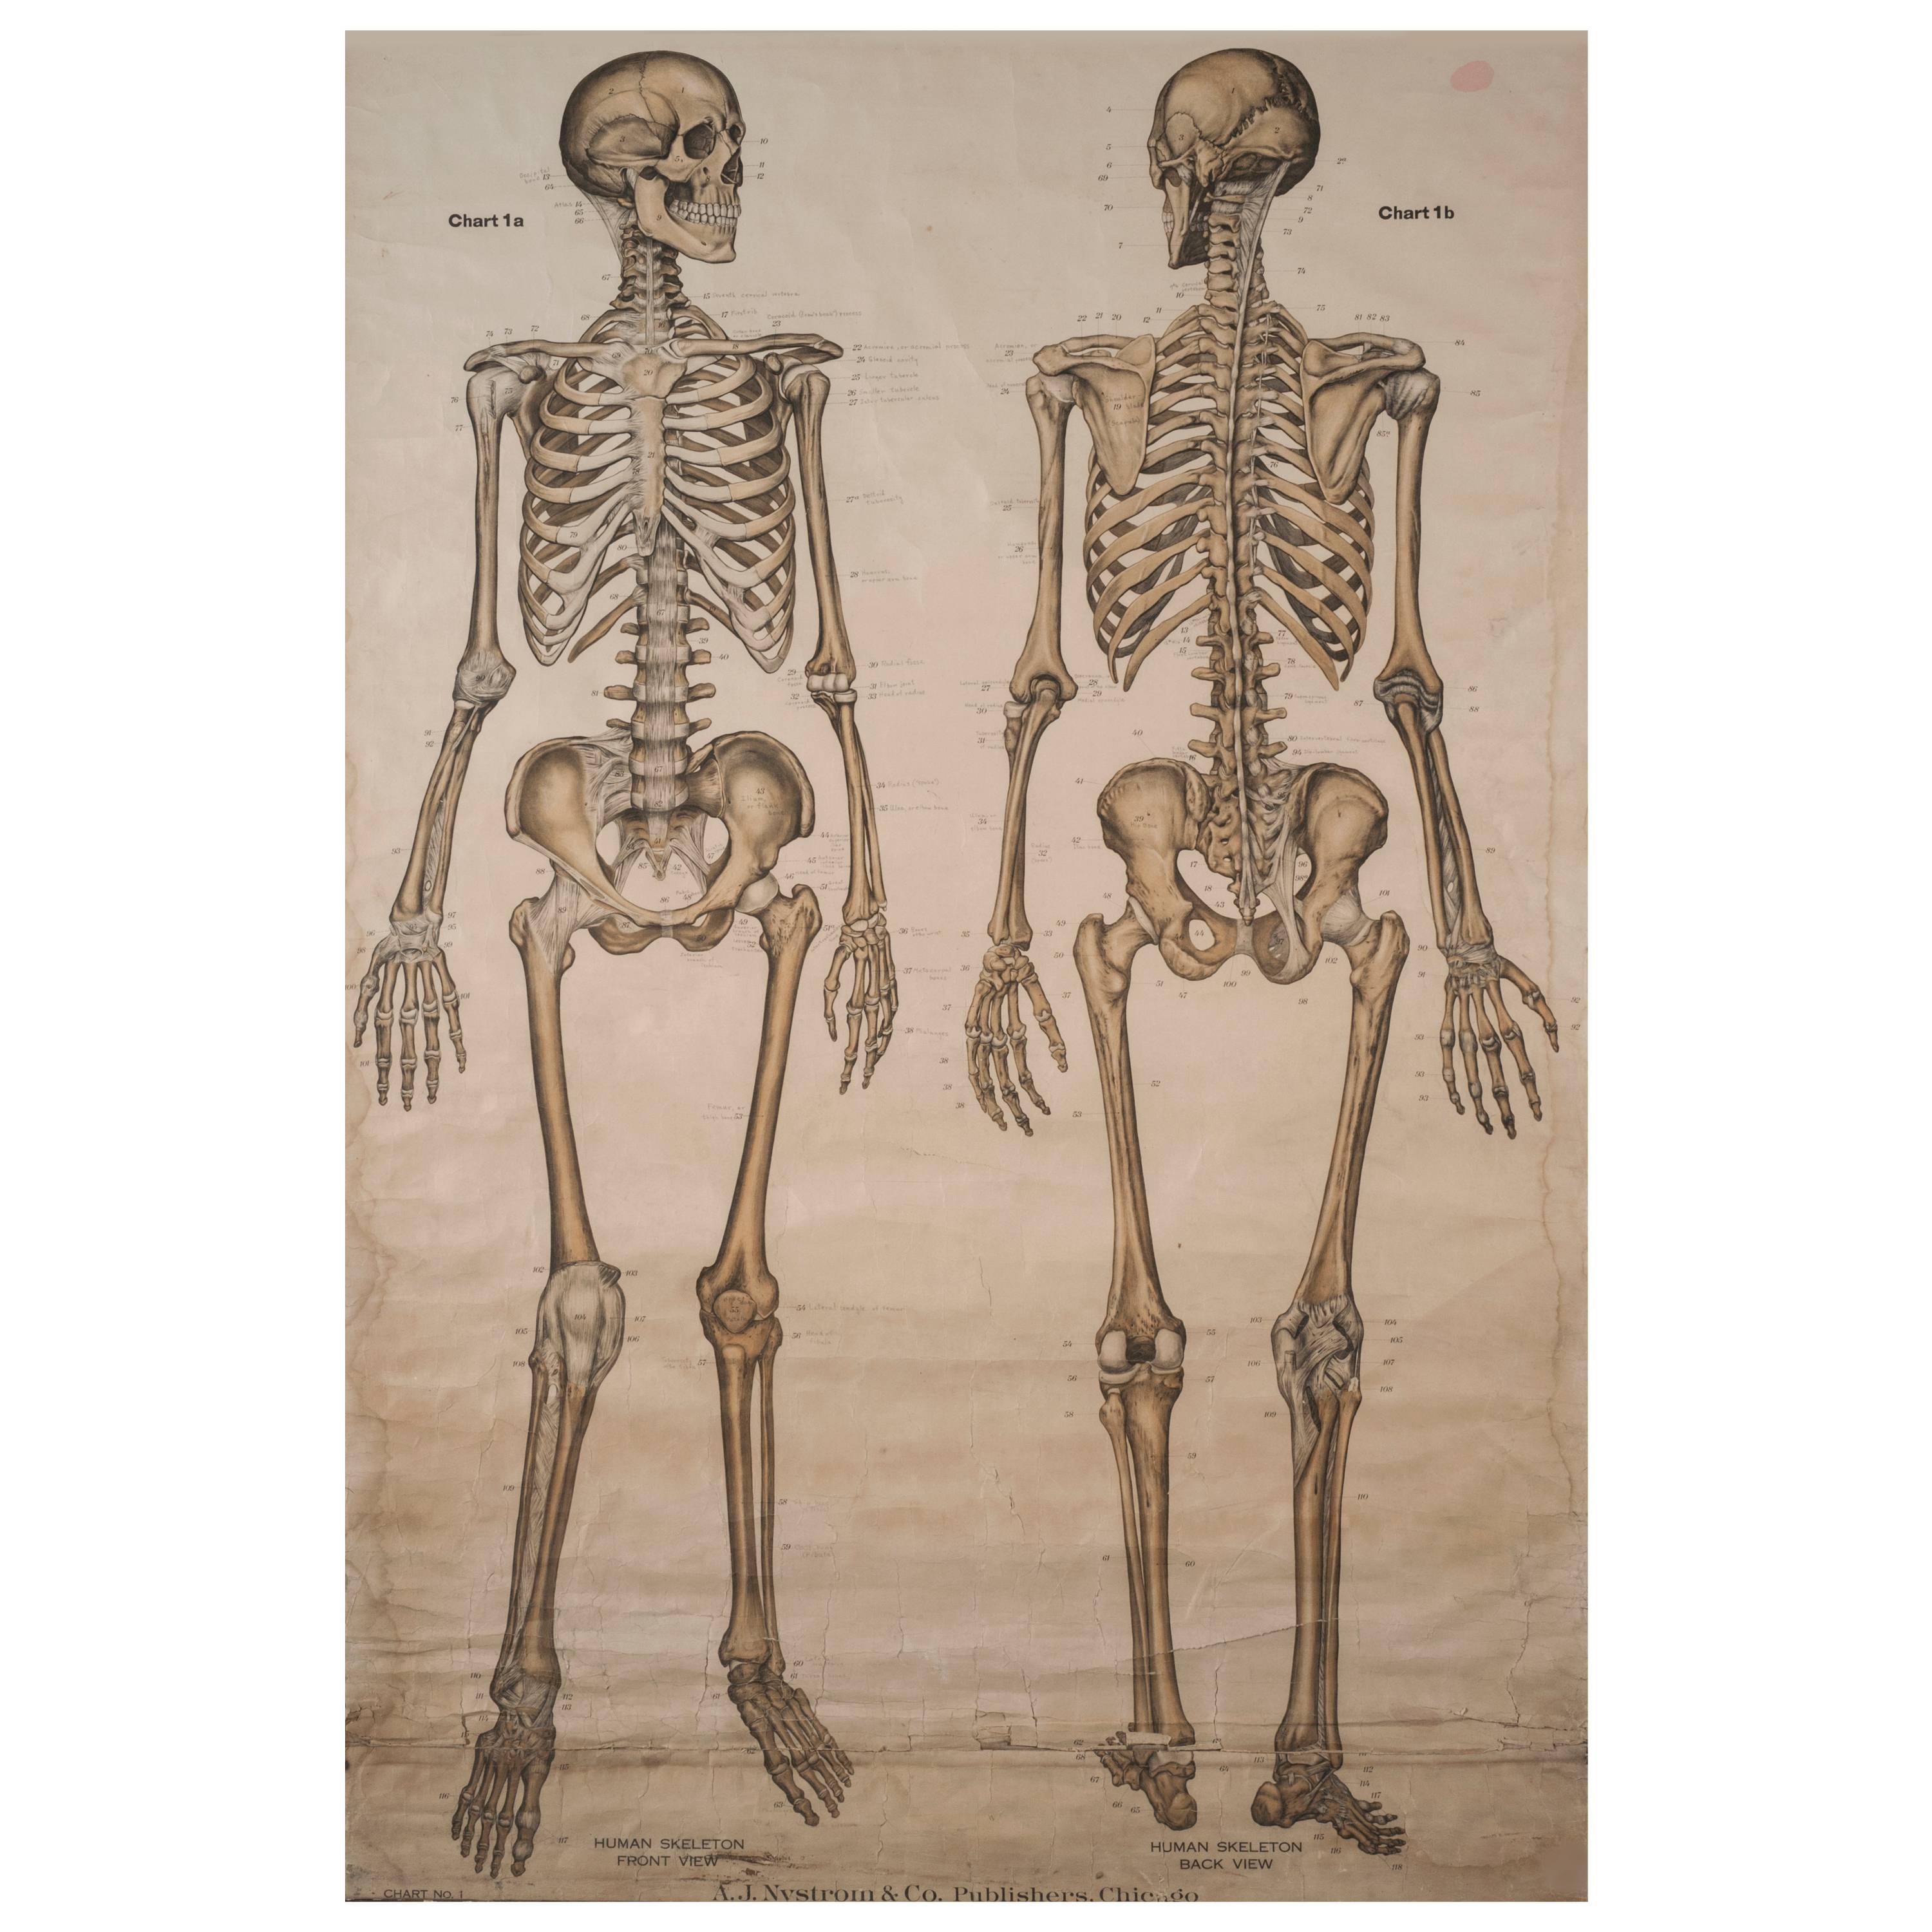 Frohse Anatomical Chart Human Skeleton, 1918